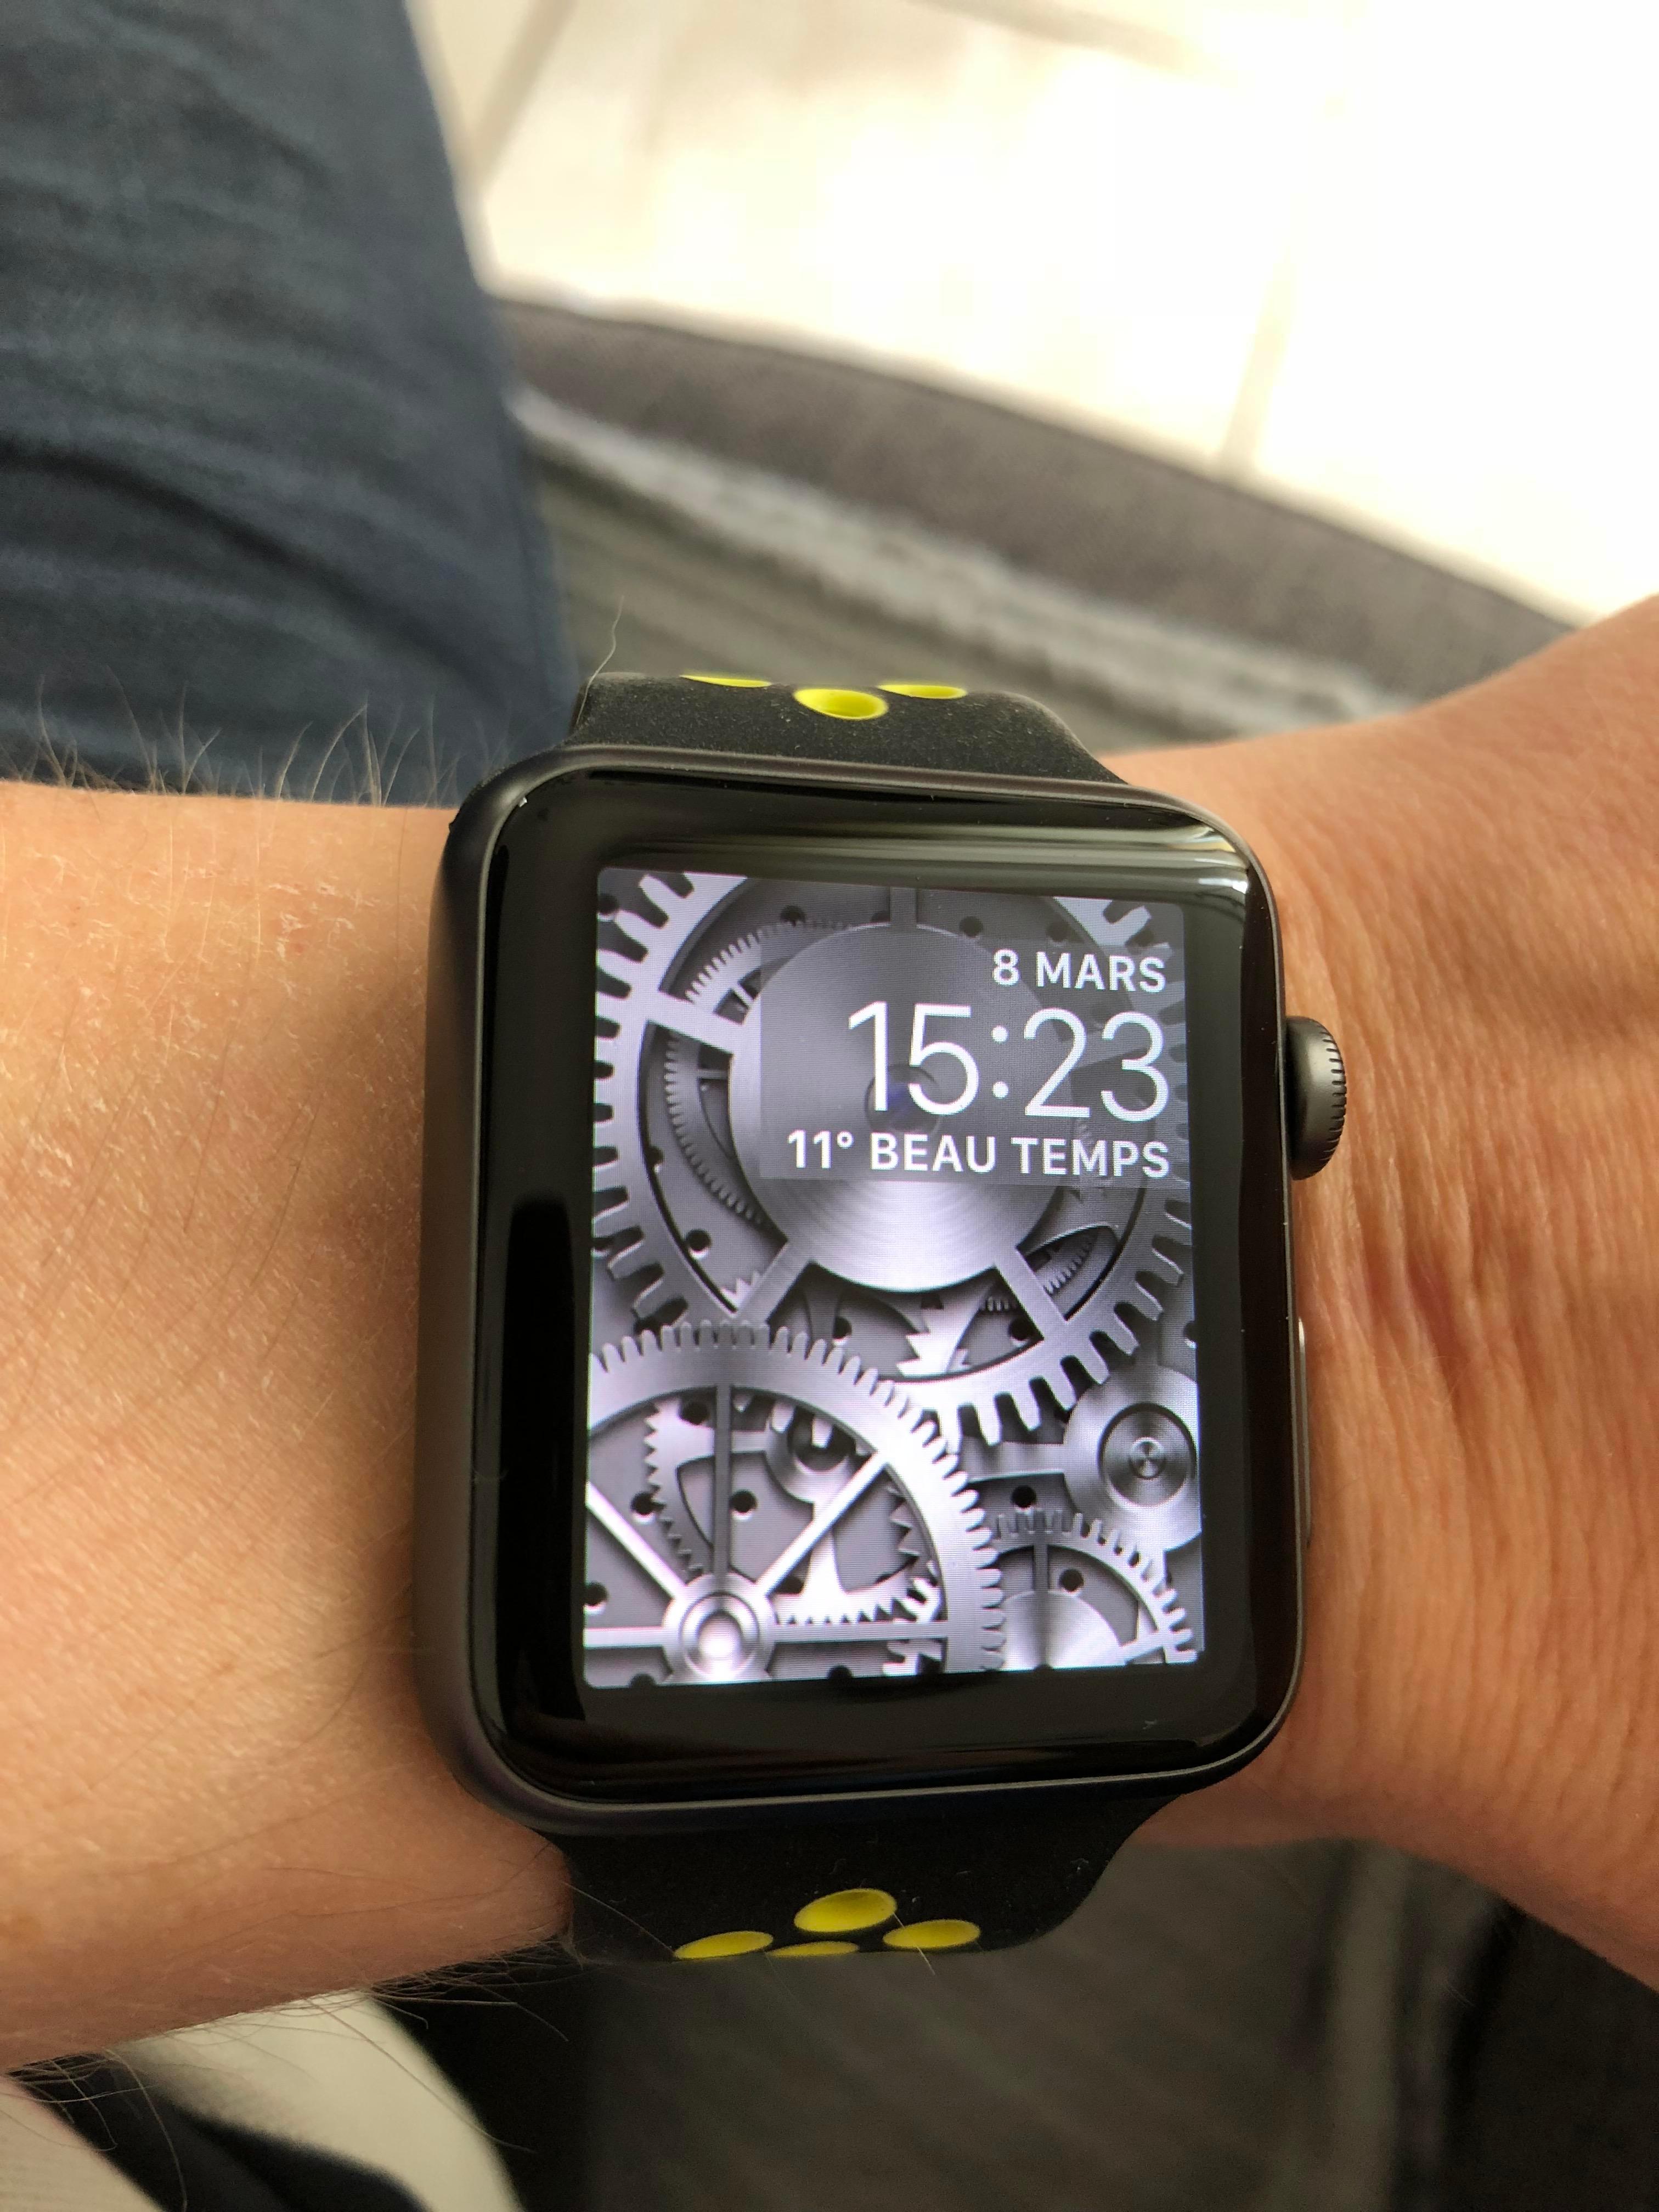 Download Apple Watch Wallpaper Hd Backgrounds Download Itl Cat